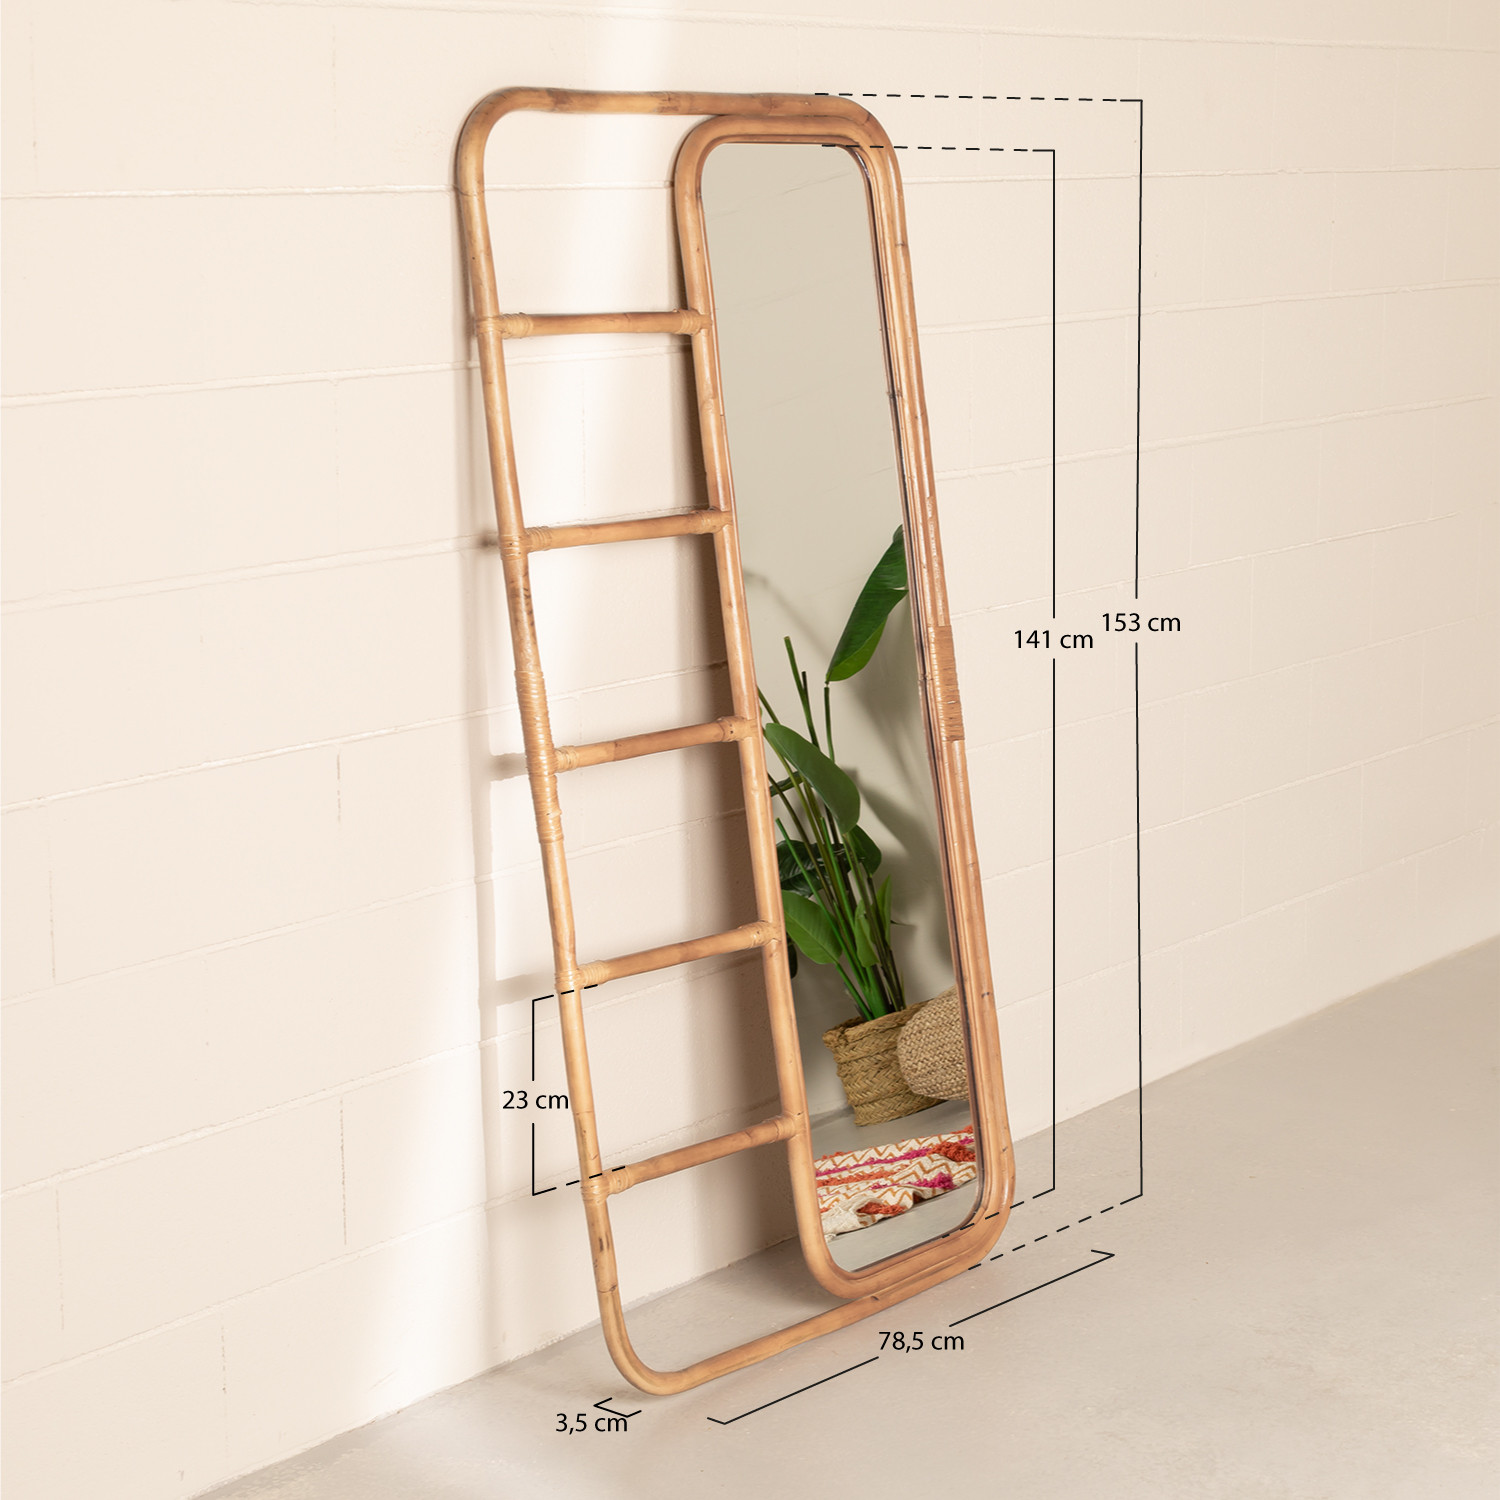 Specchio da terra rettangolare in bambù con appendiabiti (153x78,5 cm)  Marcus - SKLUM